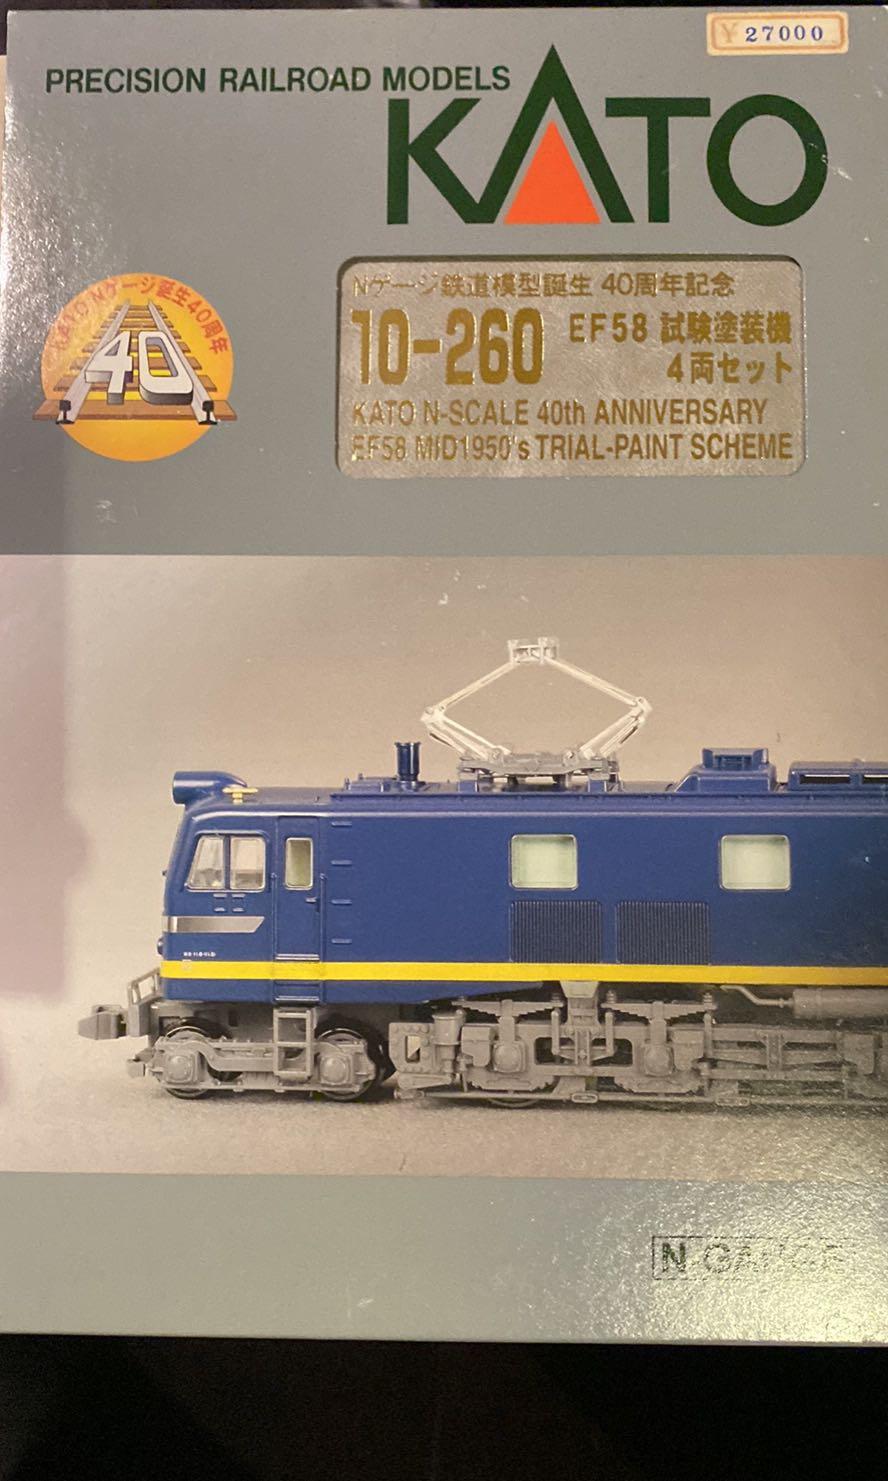 限定品定番KATO 10-260 EF58 試験塗装機 4両セット Nゲージ鉄道模型誕生40周年記念krn040508 電気機関車